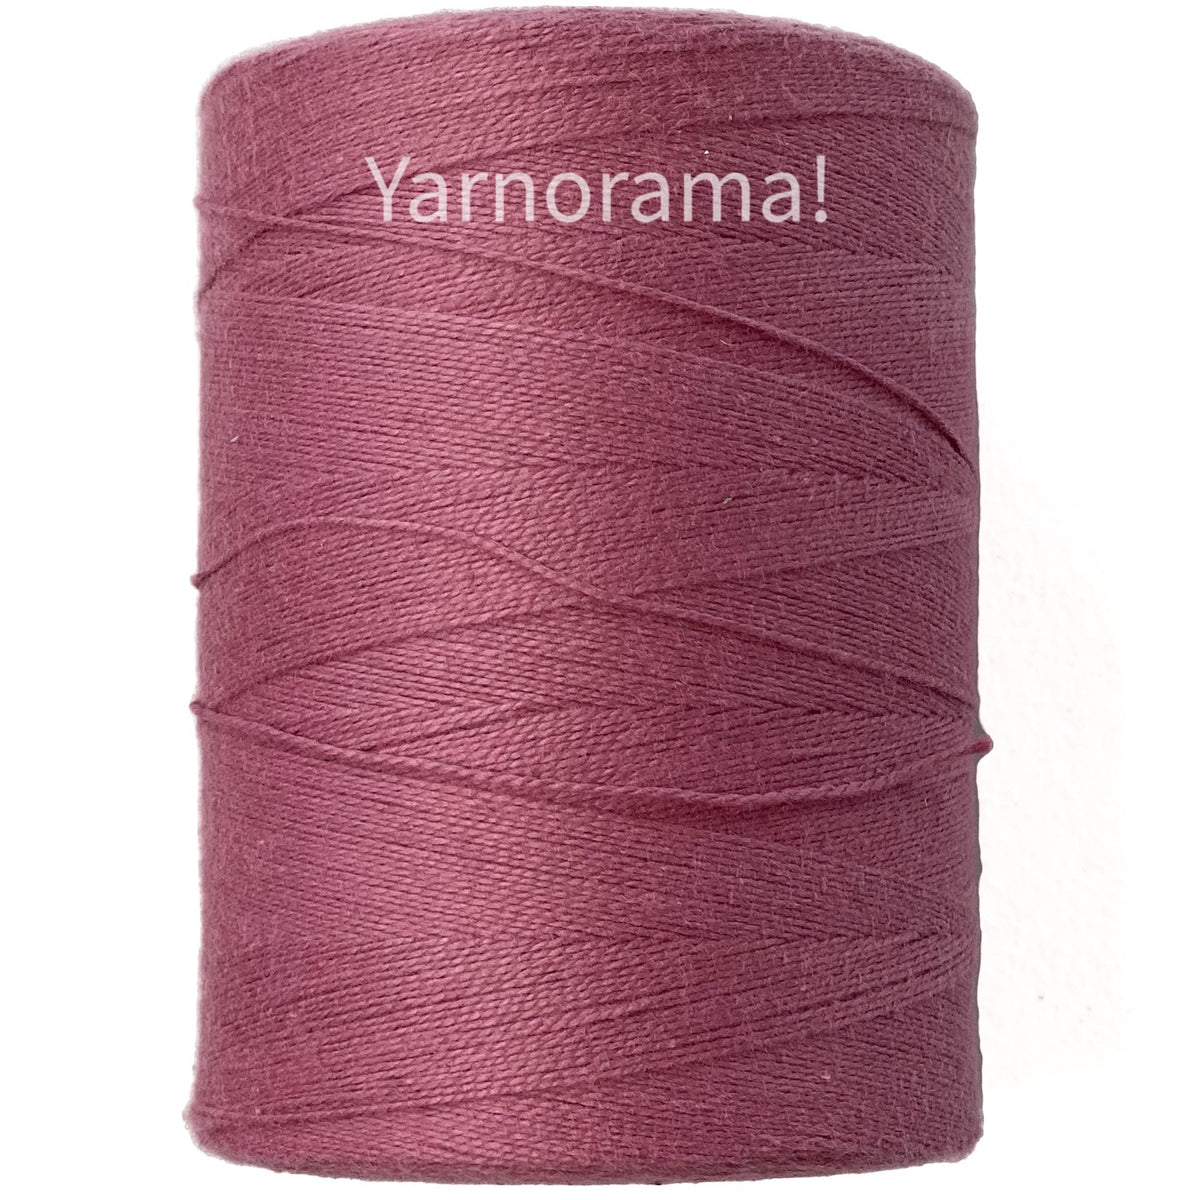 16/2 Unmercerized Cotton - Maurice Brassard-Weaving Yarn-Bordeaux - 1770-Yarnorama